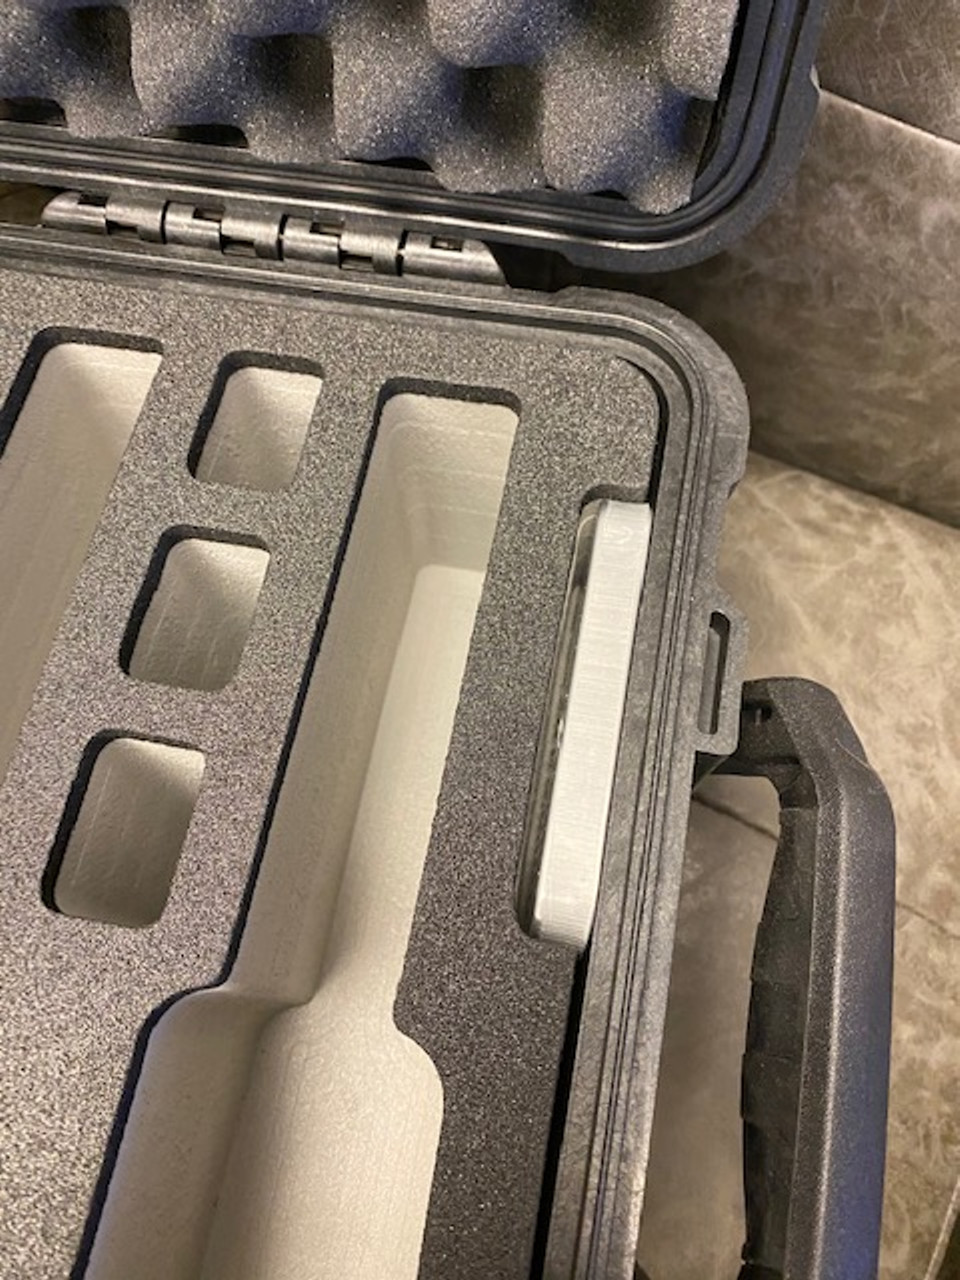 Pelican™ 1500 5-Pistol Case - Nalpak, Inc.